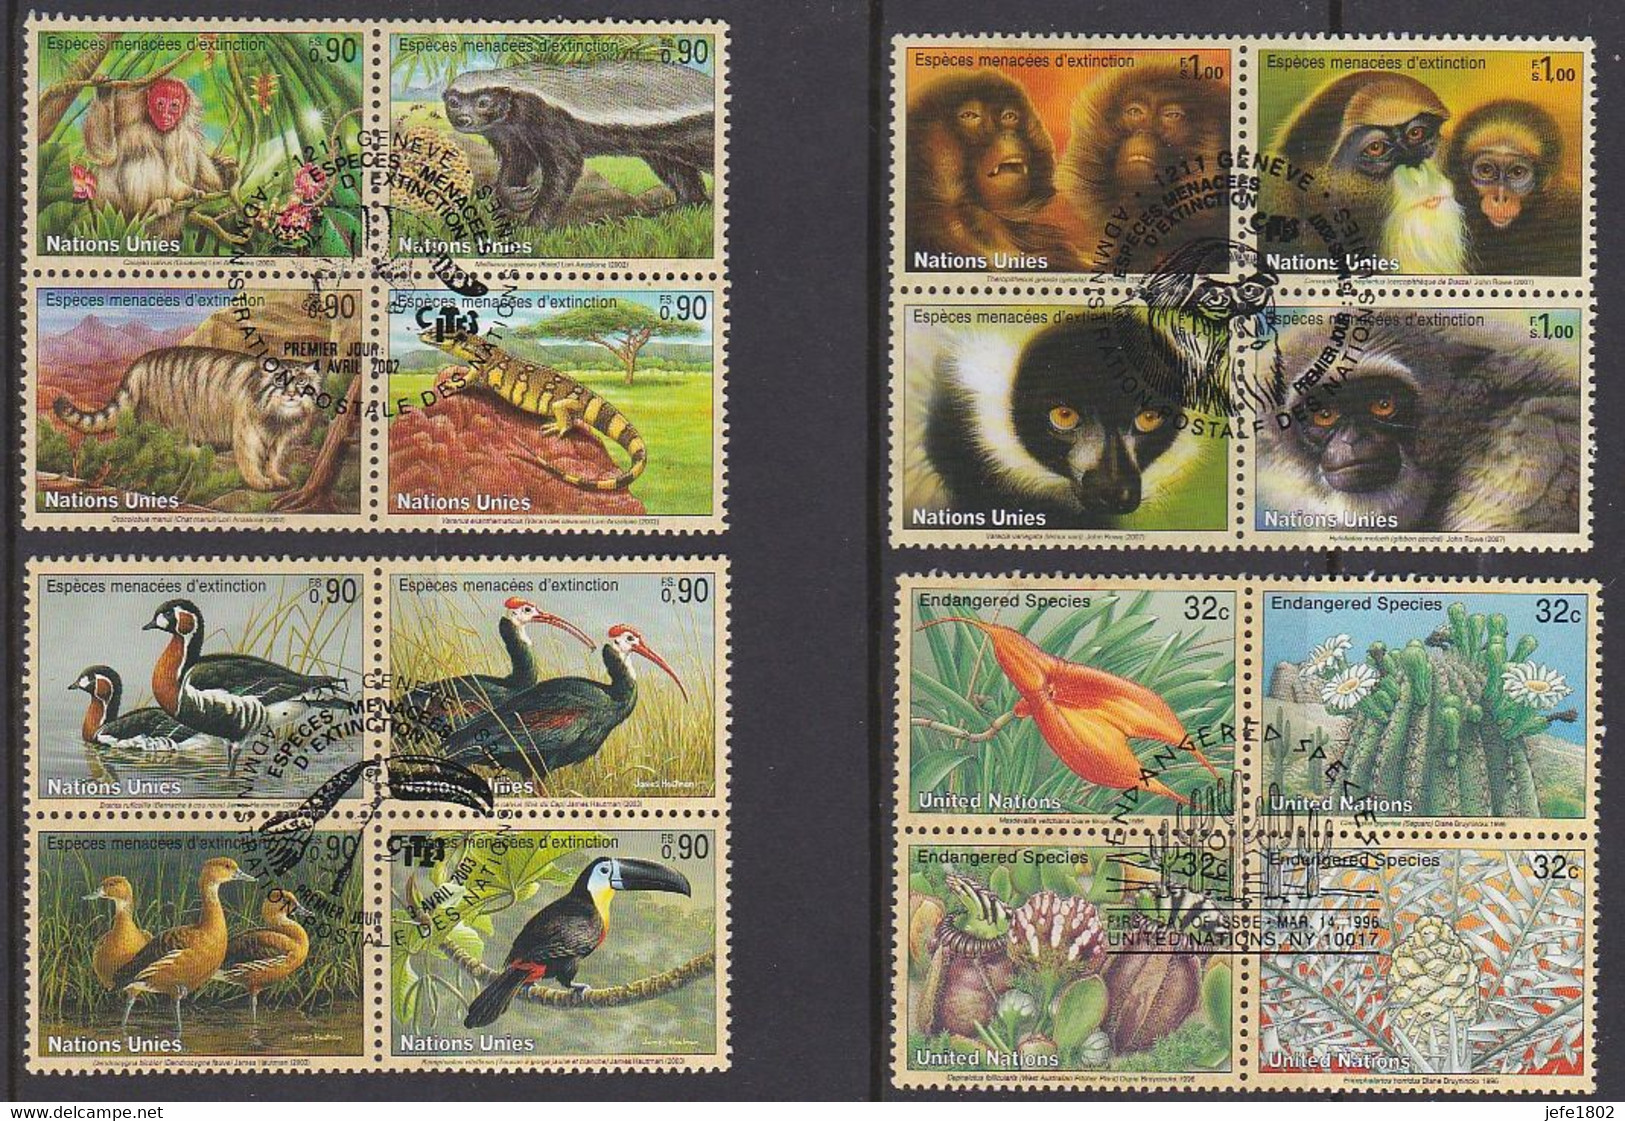 Espèces Menacées D'extinction (FS) Endangered Species (c)  - 16 Cancelled Stamps Nations Unies - United Nations - Verzamelingen & Reeksen